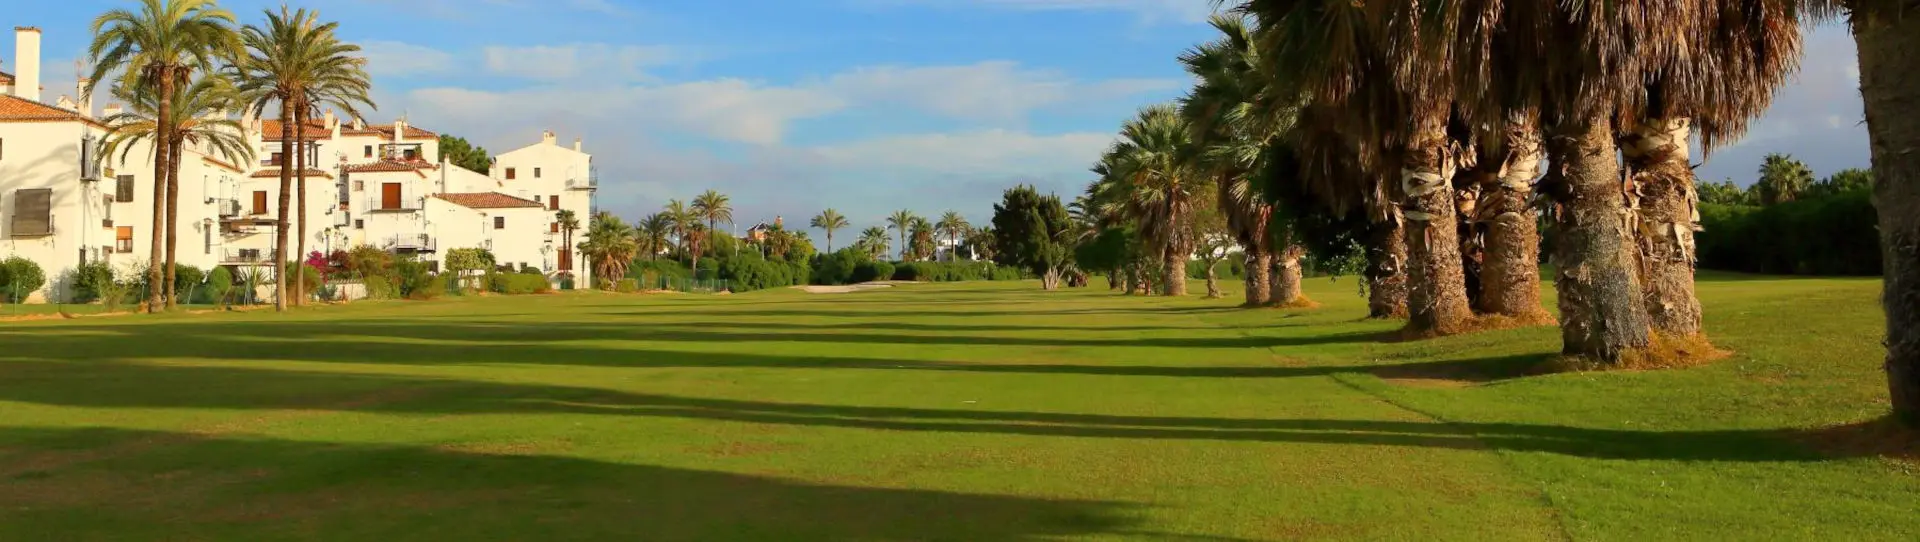 Spain golf holidays - Malaga 2 Golf - 2 Pax w/ Buggy - Photo 1